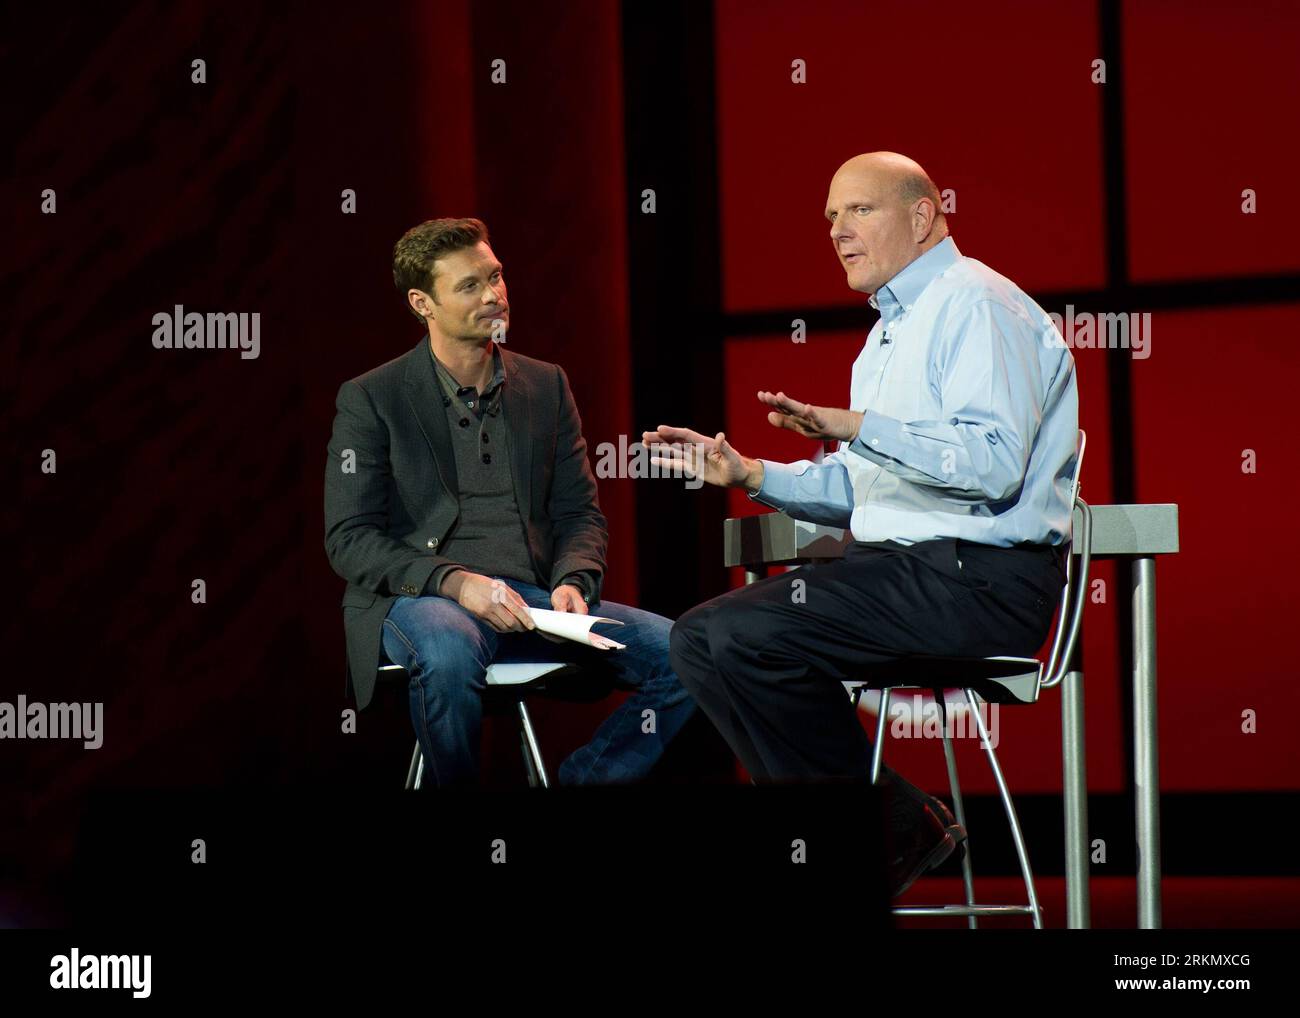 Bildnummer: 56850463  Datum: 09.01.2012  Copyright: imago/Xinhua (120110) -- LAS VEGAS, Jan. 10, 2012 (Xinhua) -- Microsoft CEO Steve Ballmer (R) gestures during his keynote address at the Consumer Electronics Show (CES) in Las Vegas, the United States, on Jan. 9, 2011. (Xinhua/Yang Lei) (nxl) US-LAS VEGAS-CES-MICROSOFT-BALLMER PUBLICATIONxNOTxINxCHN People Wirtschaft Präsentation Messe Computermesse premiumd xbs x0x 2012 quer      56850463 Date 09 01 2012 Copyright Imago XINHUA  Las Vegas Jan 10 2012 XINHUA Microsoft CEO Steve Ballmer r gestures during His keynote Address AT The Consumer Elec Stock Photo